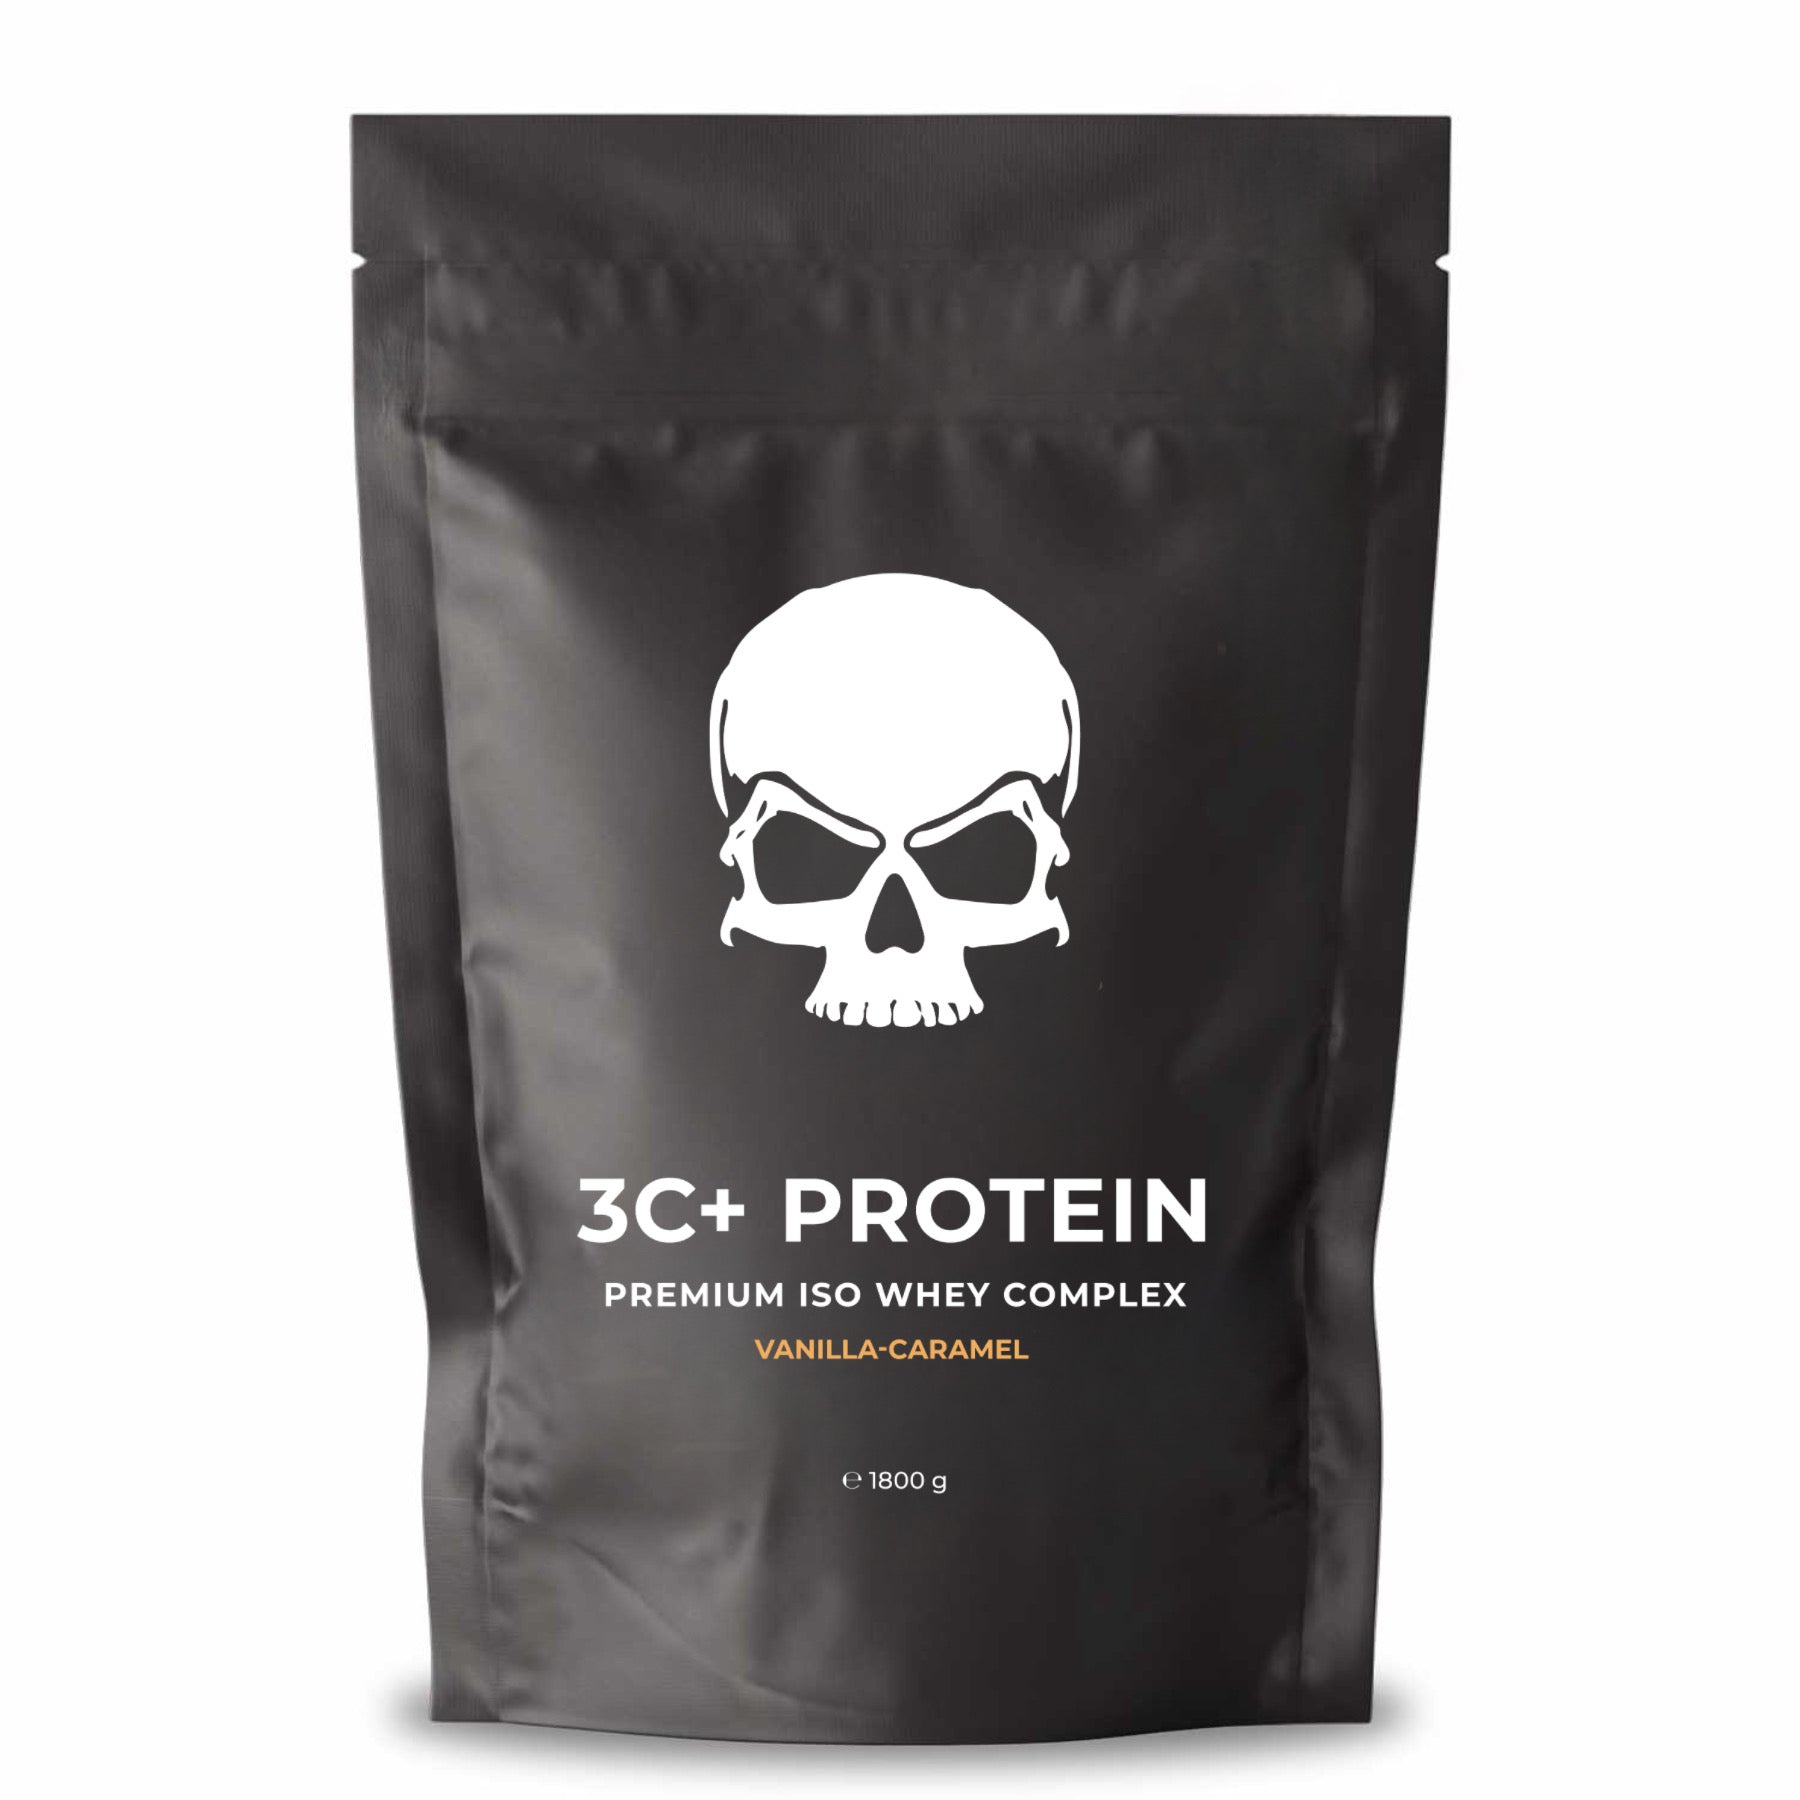 3C+ Protein  - Premium Iso Whey Complex